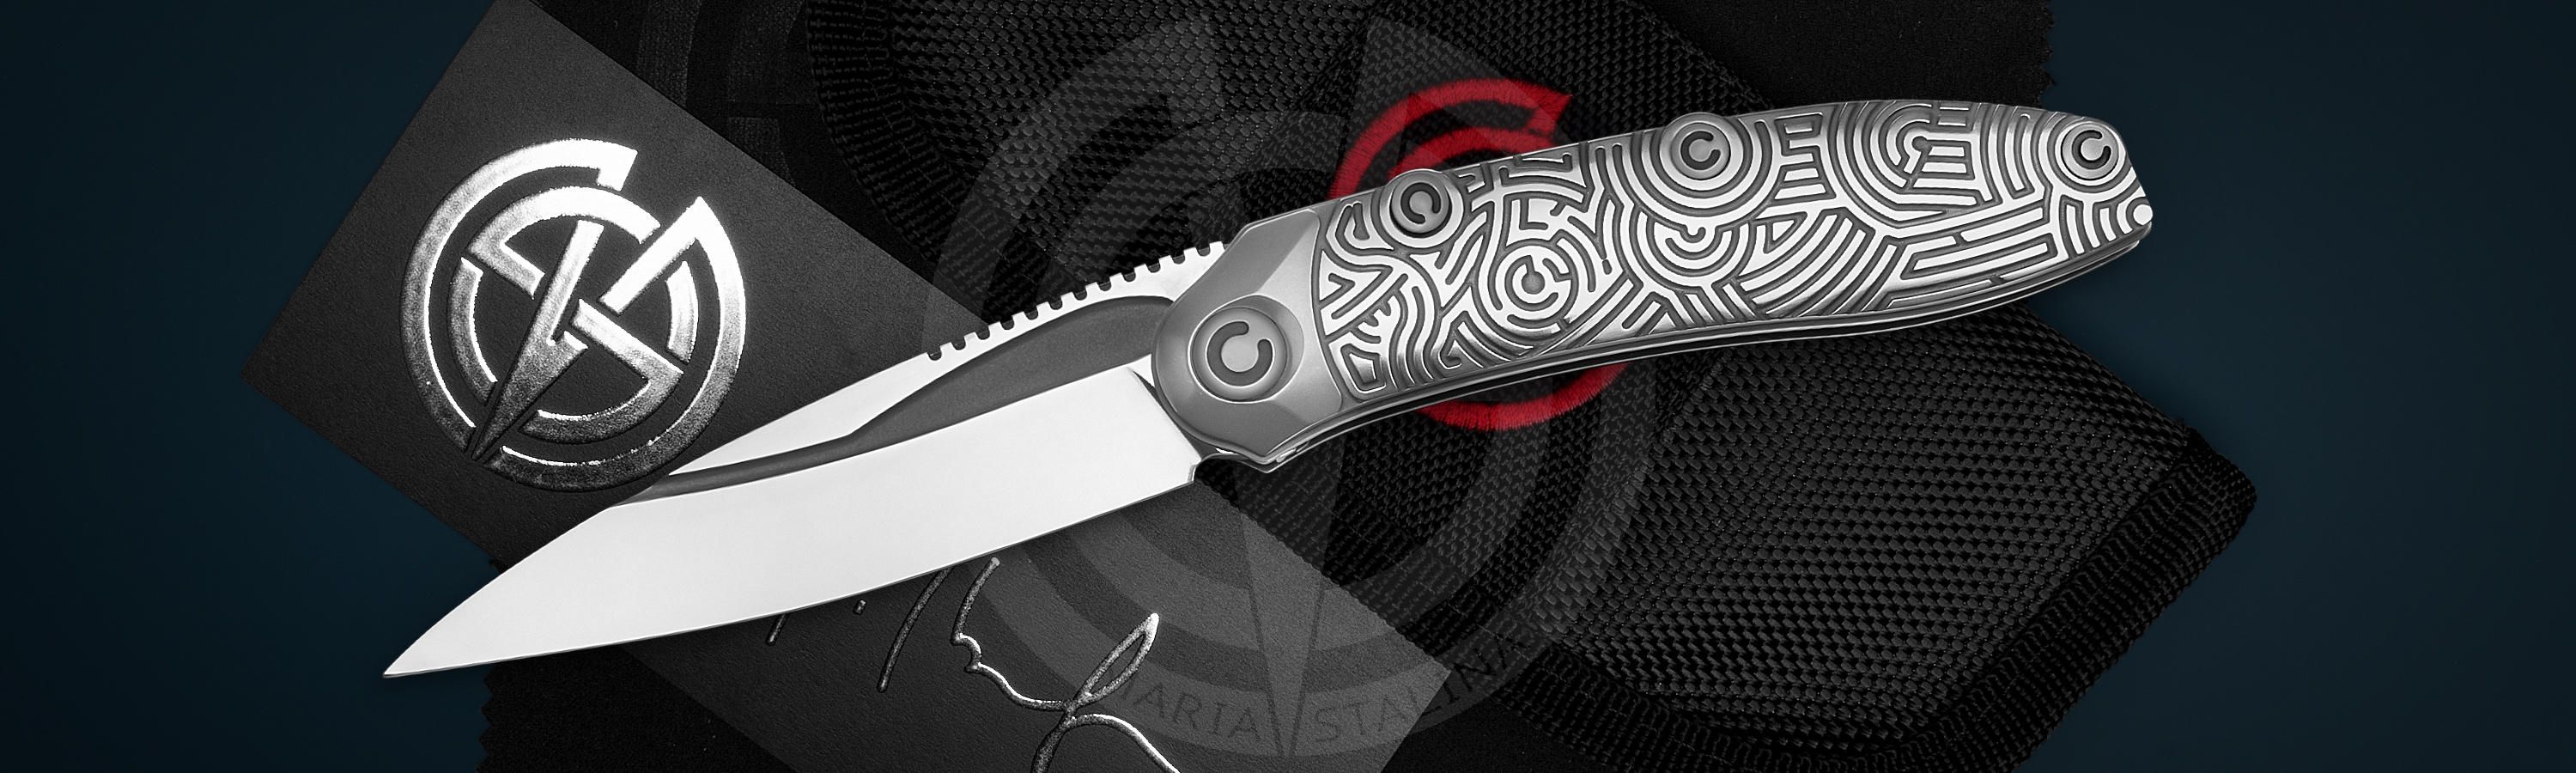 Нож Техношаман Прото 2.0 с чехлом, сертификатом, микрофиброй